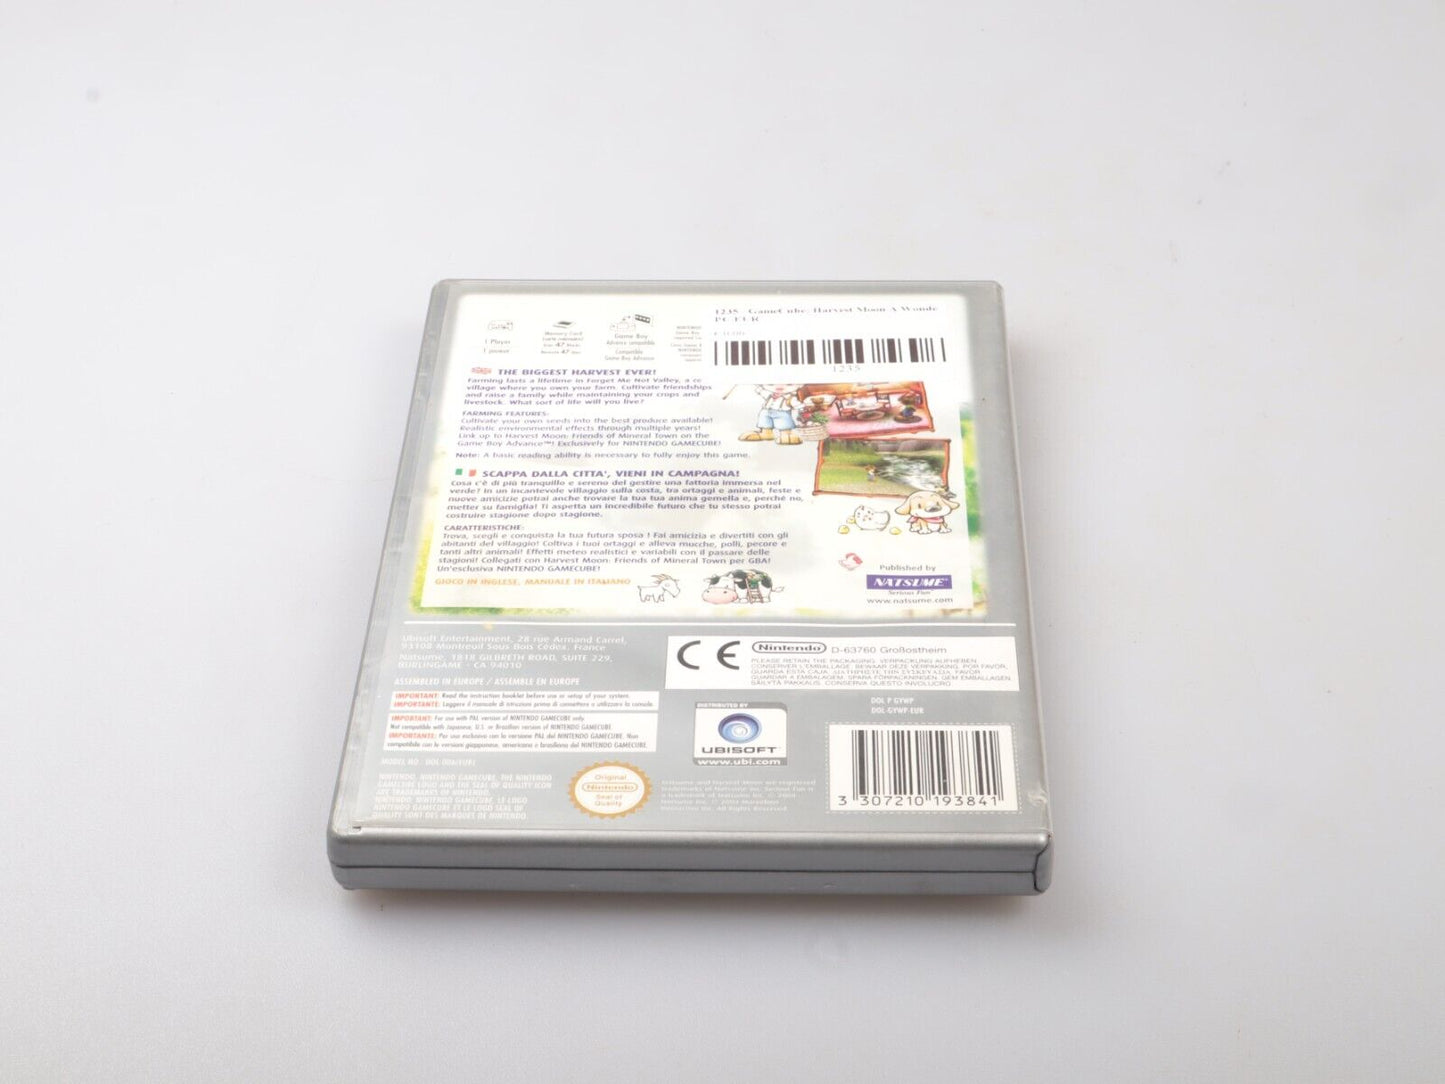 GameCube | Harvest Moon A Wonderful Life PC (EUR) (PAL) 